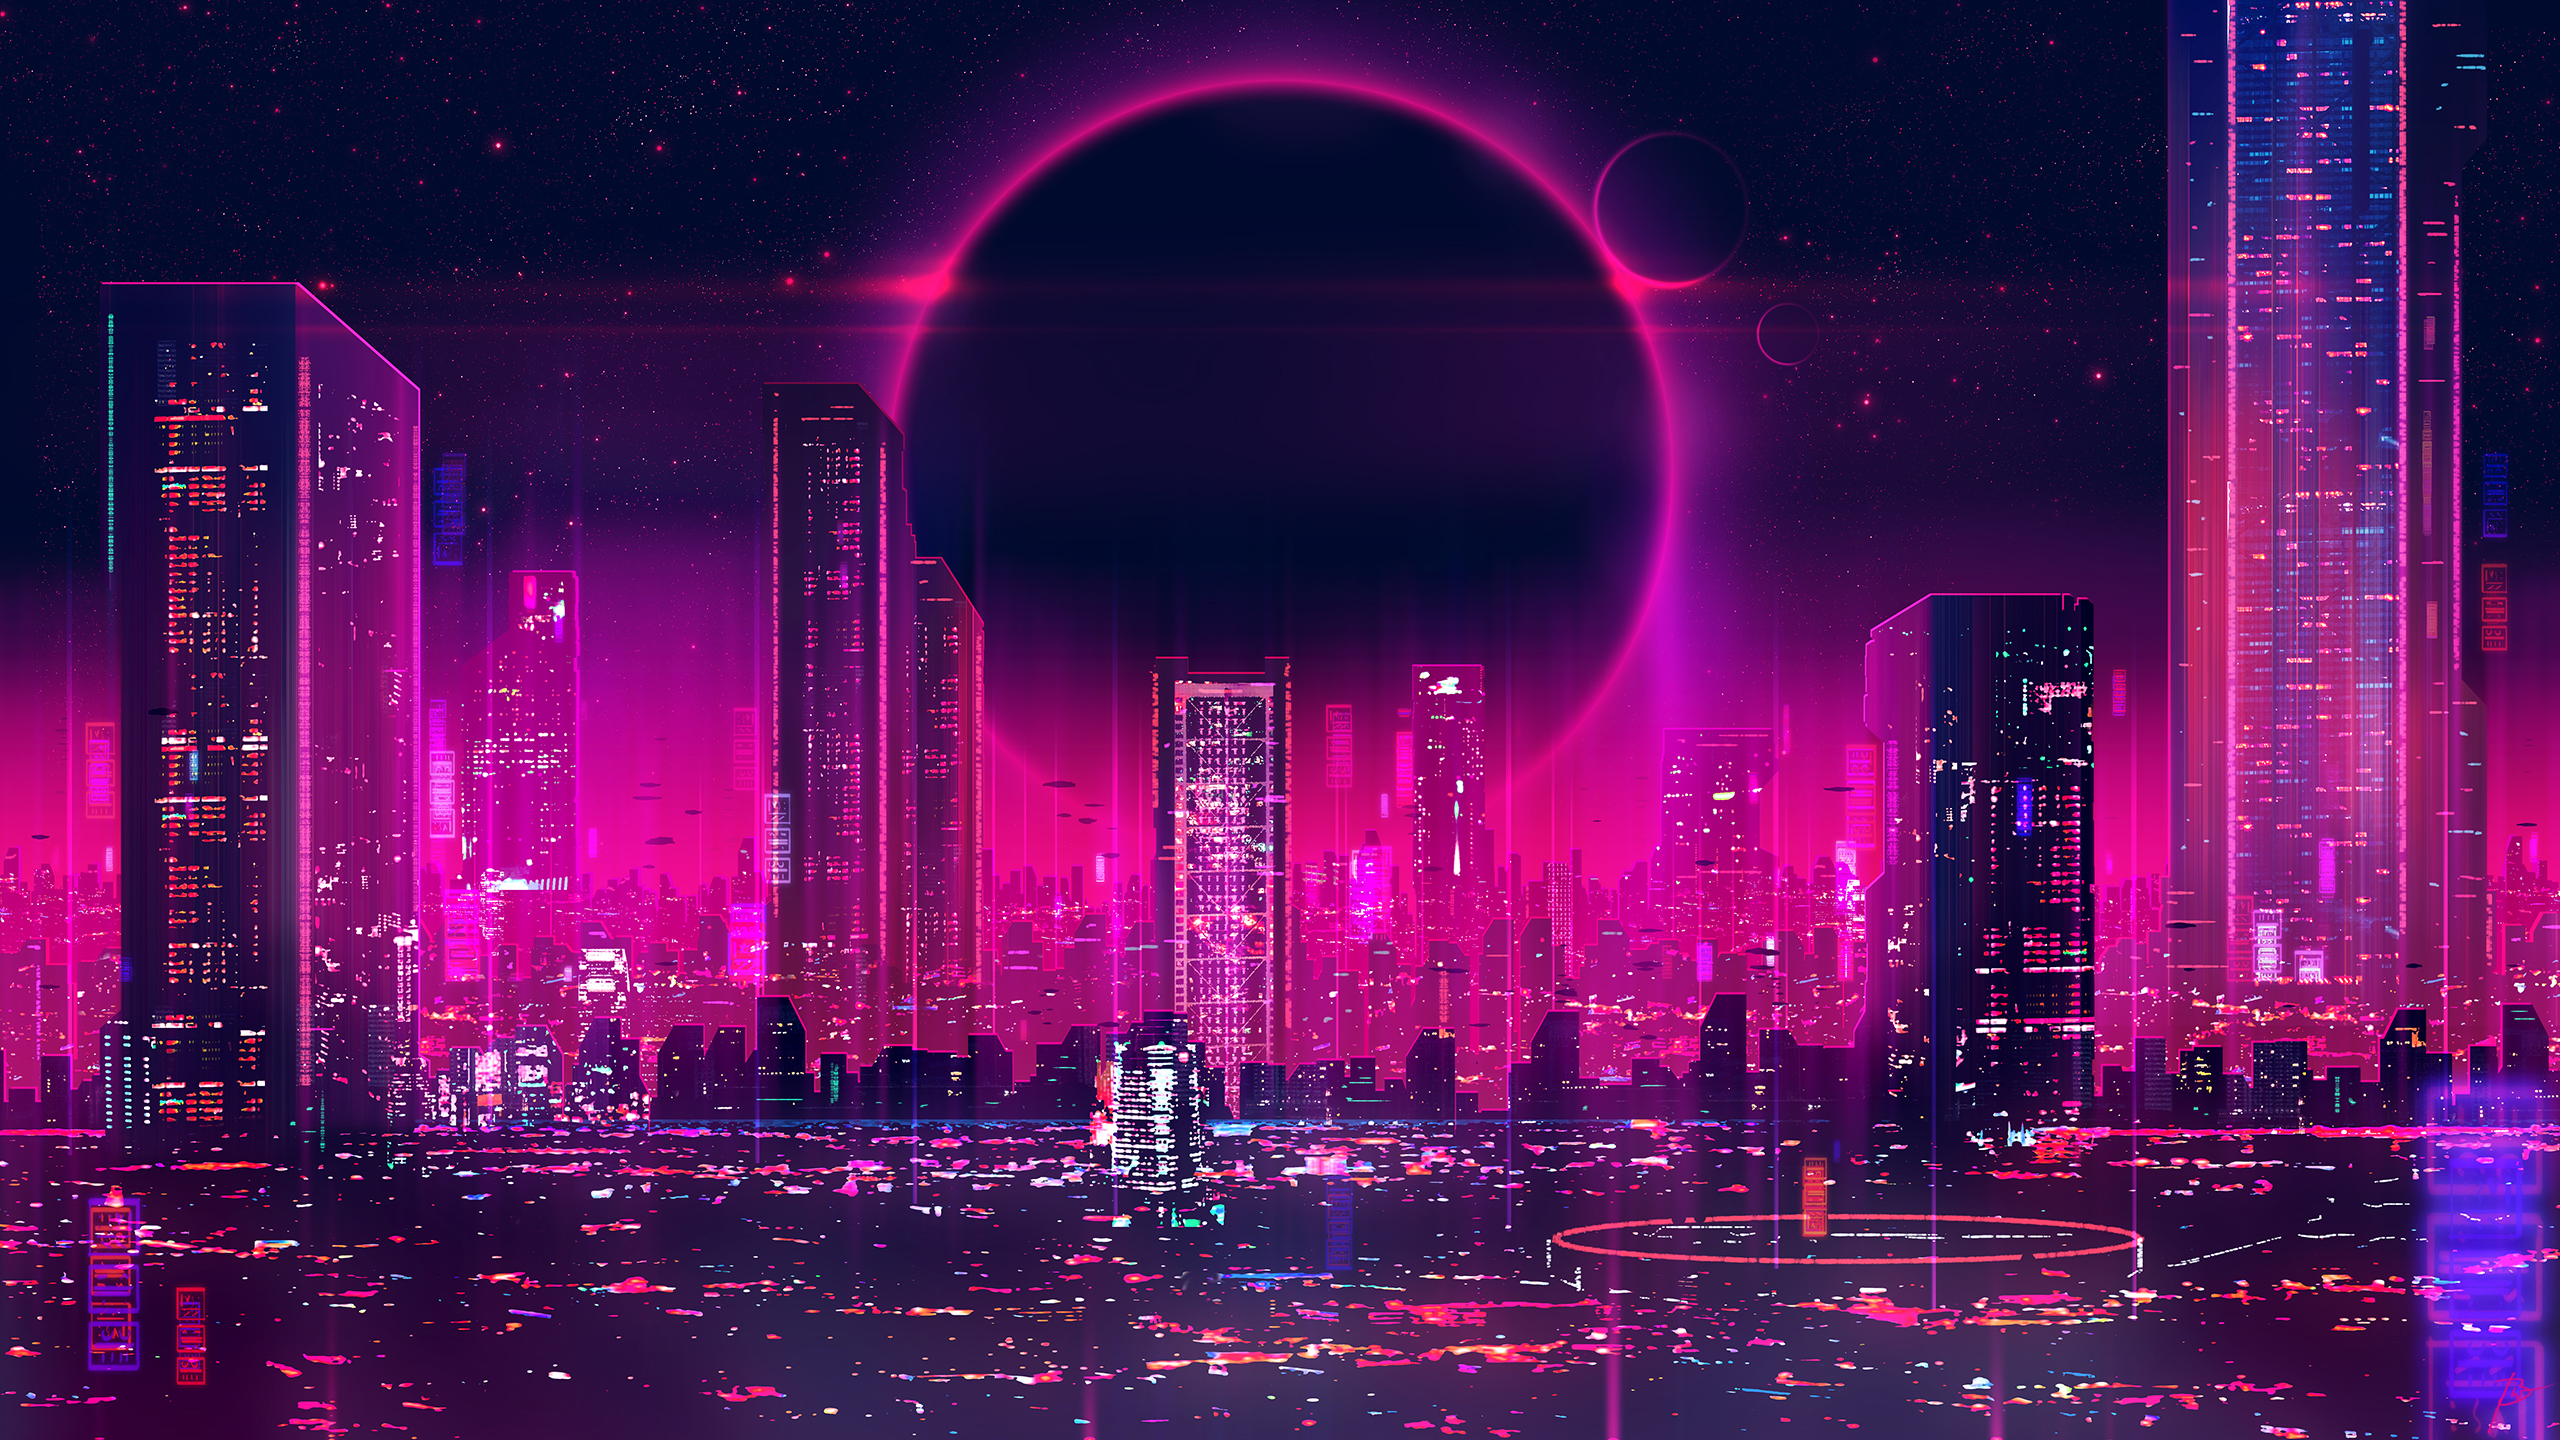 General 2560x1440 JoeyJazz science fiction neon digital art night planet stars city Gunship